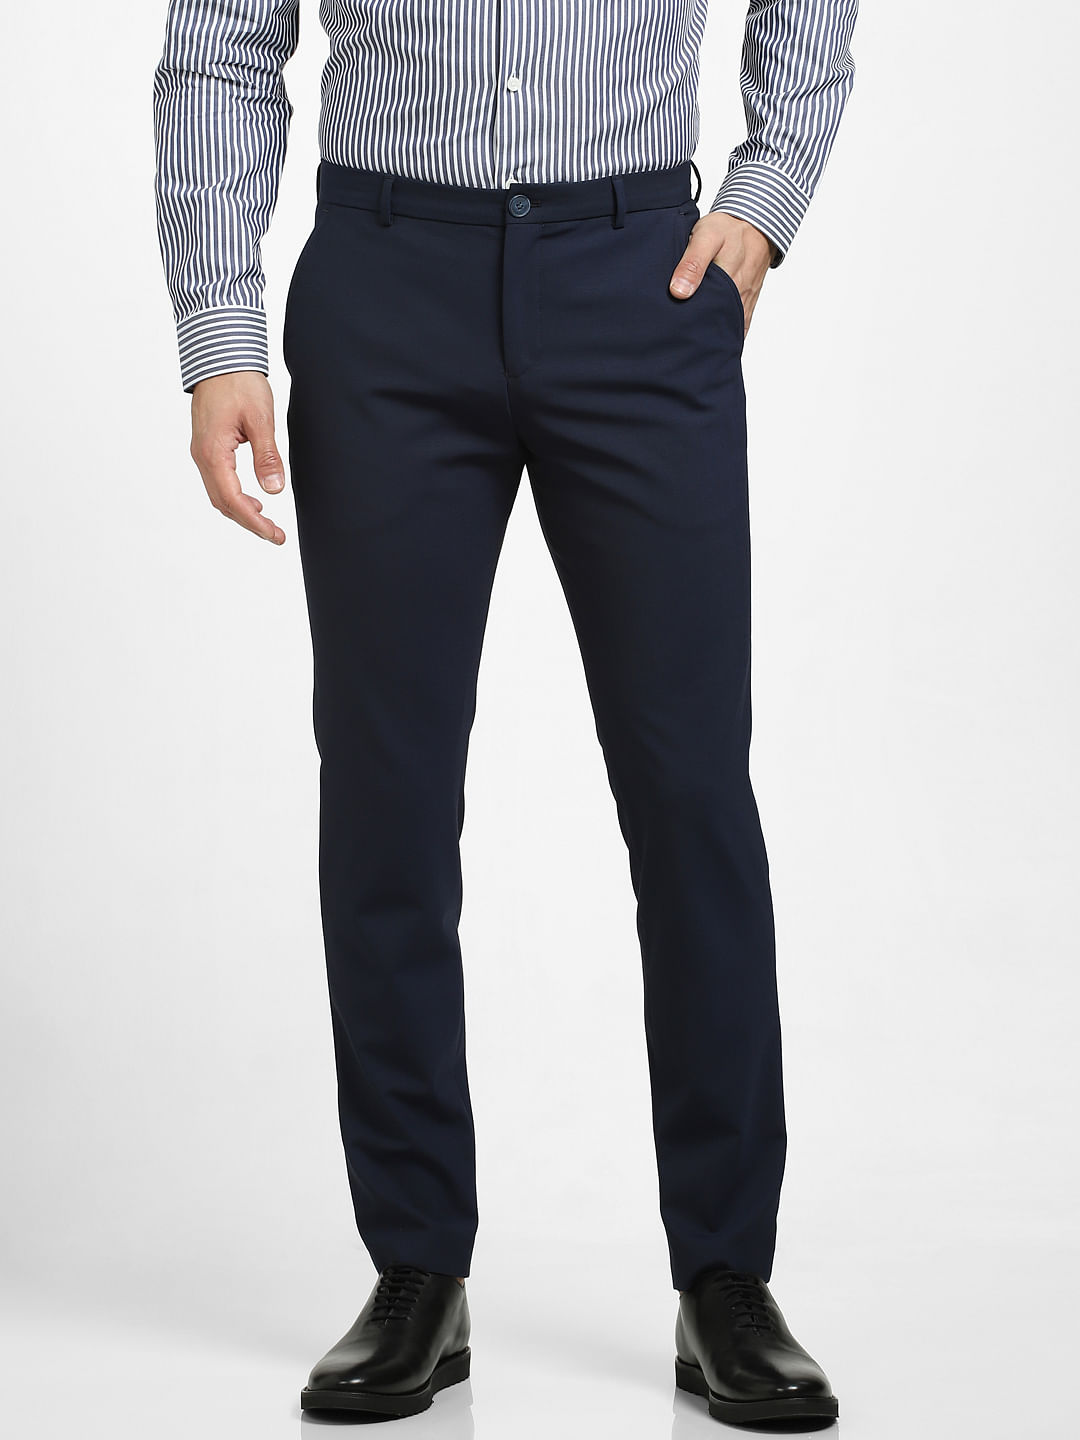 SN Men's Dress Pant Trouser Formal Dark Navy Blue – The Cut Price